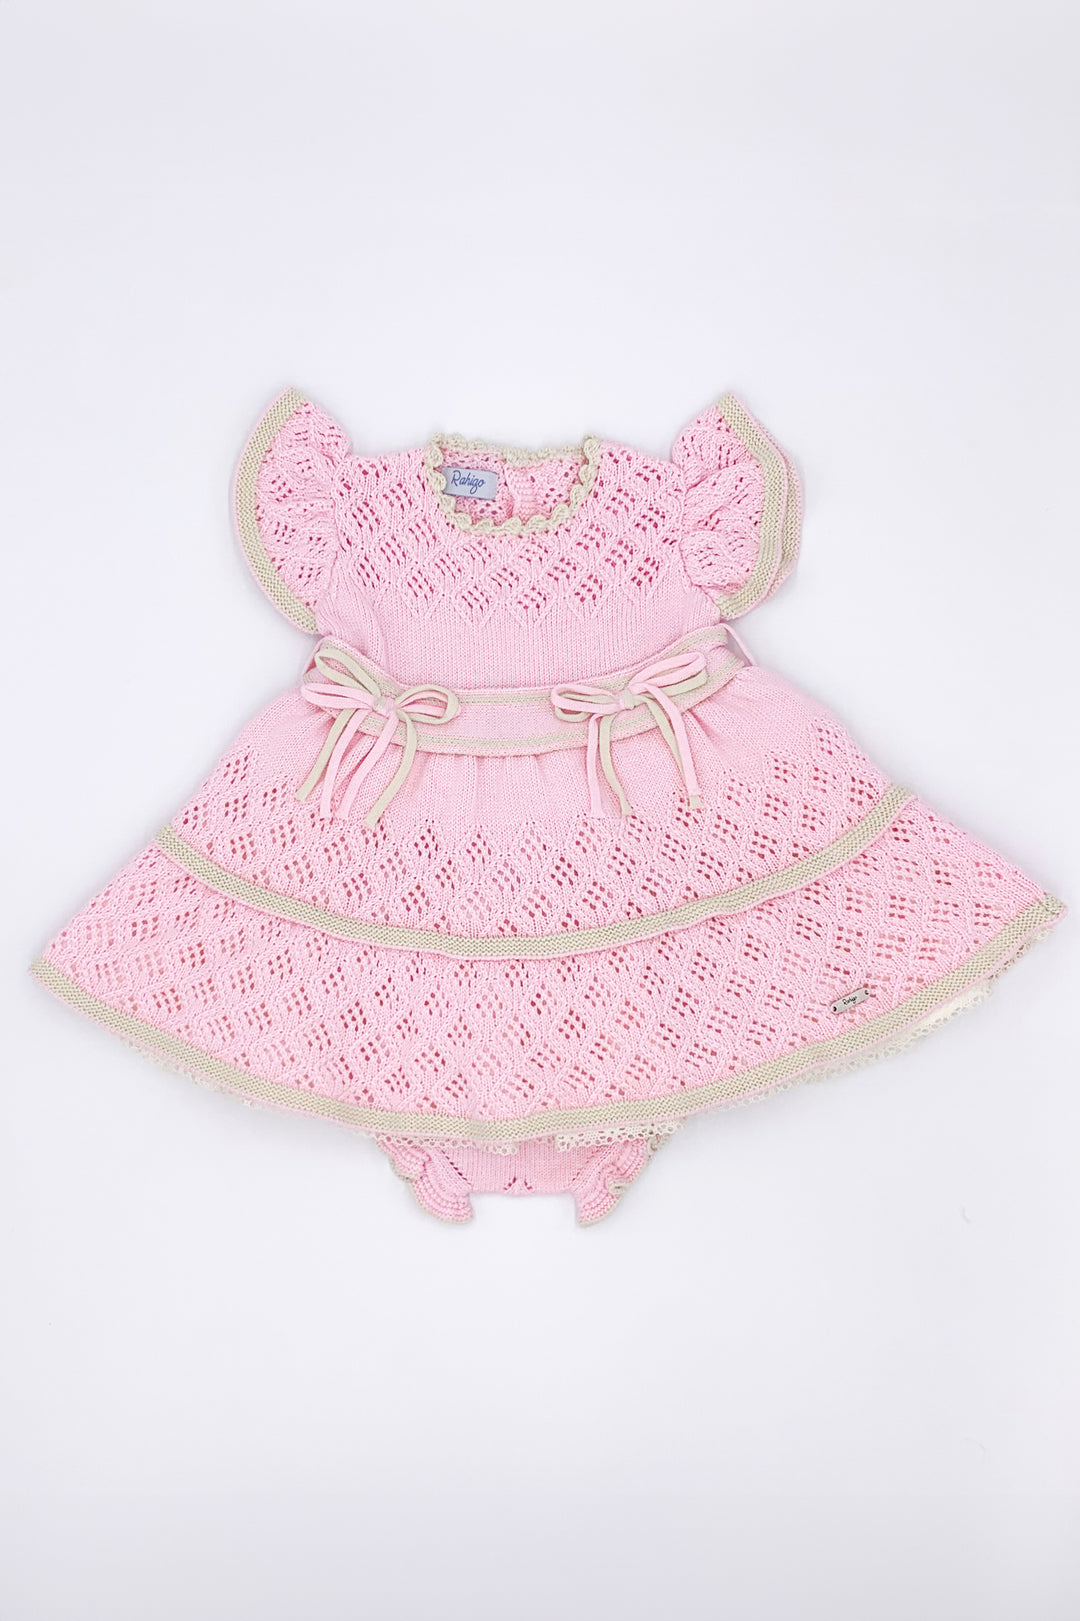 Rahigo PREORDER "Lola" Baby Pink & Cream Knit Dress | Millie and John